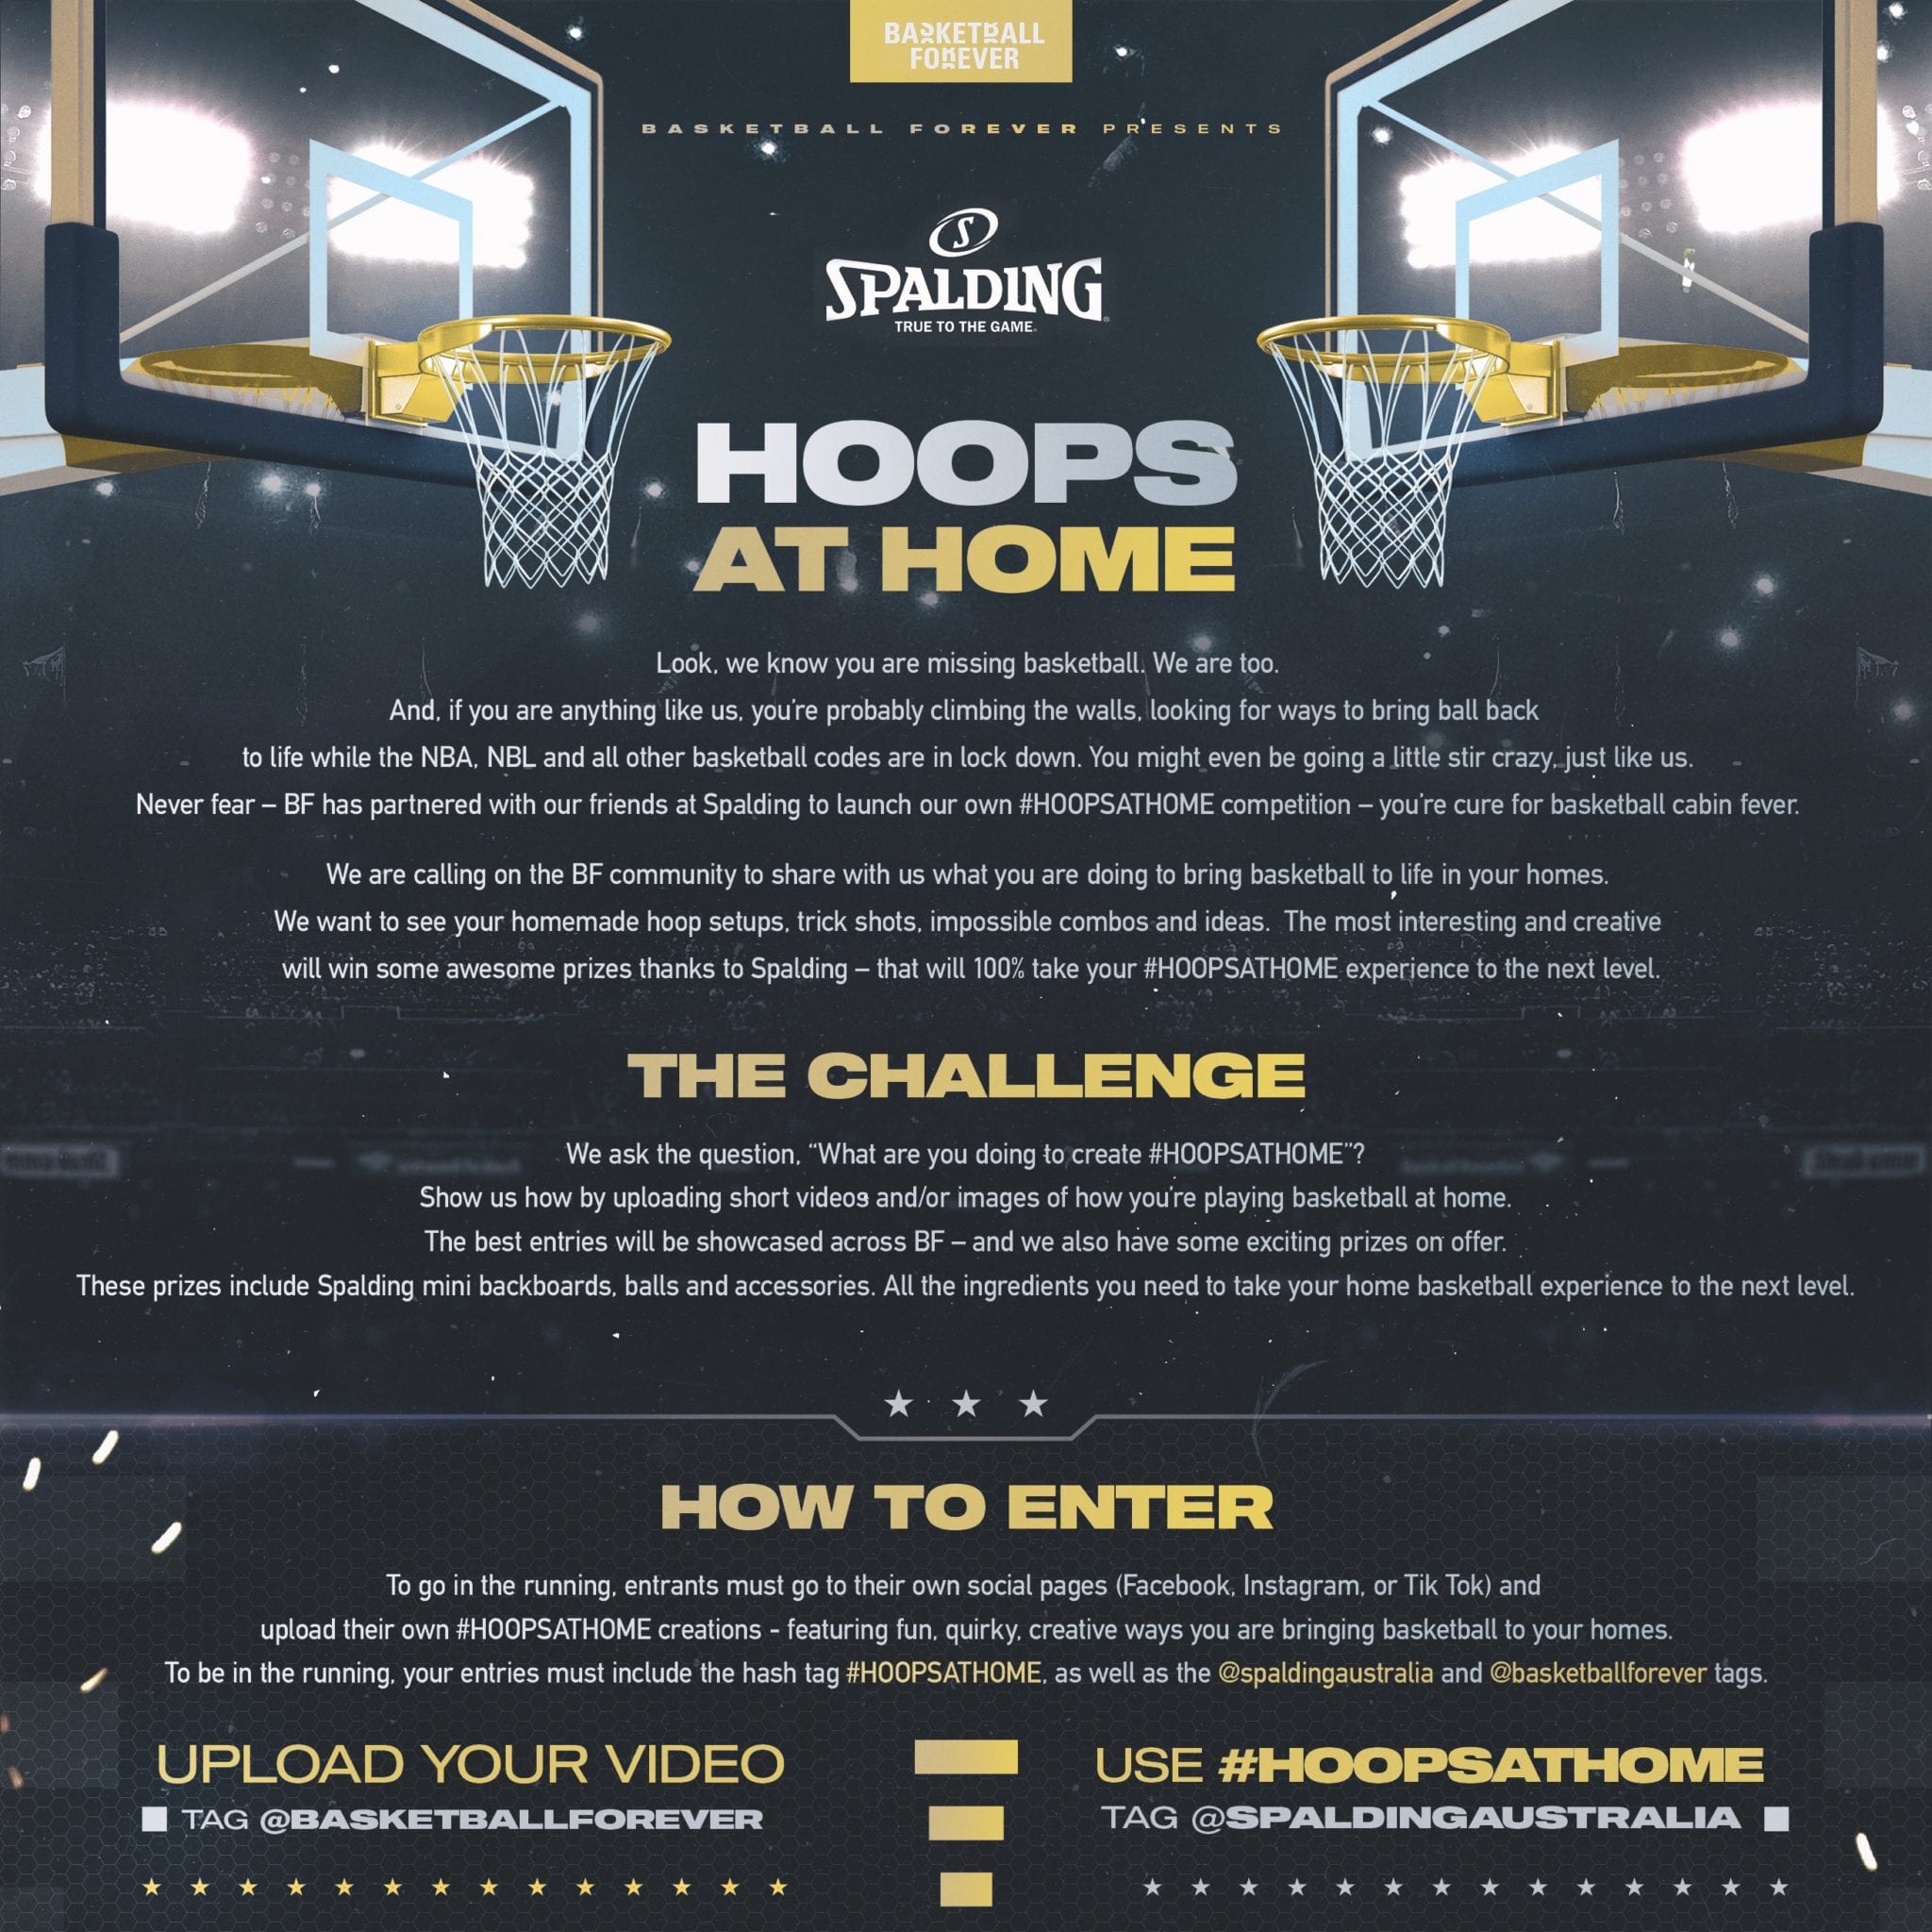 Jingle Hoops' ad creatively showcases the NBA's heinous sleeved